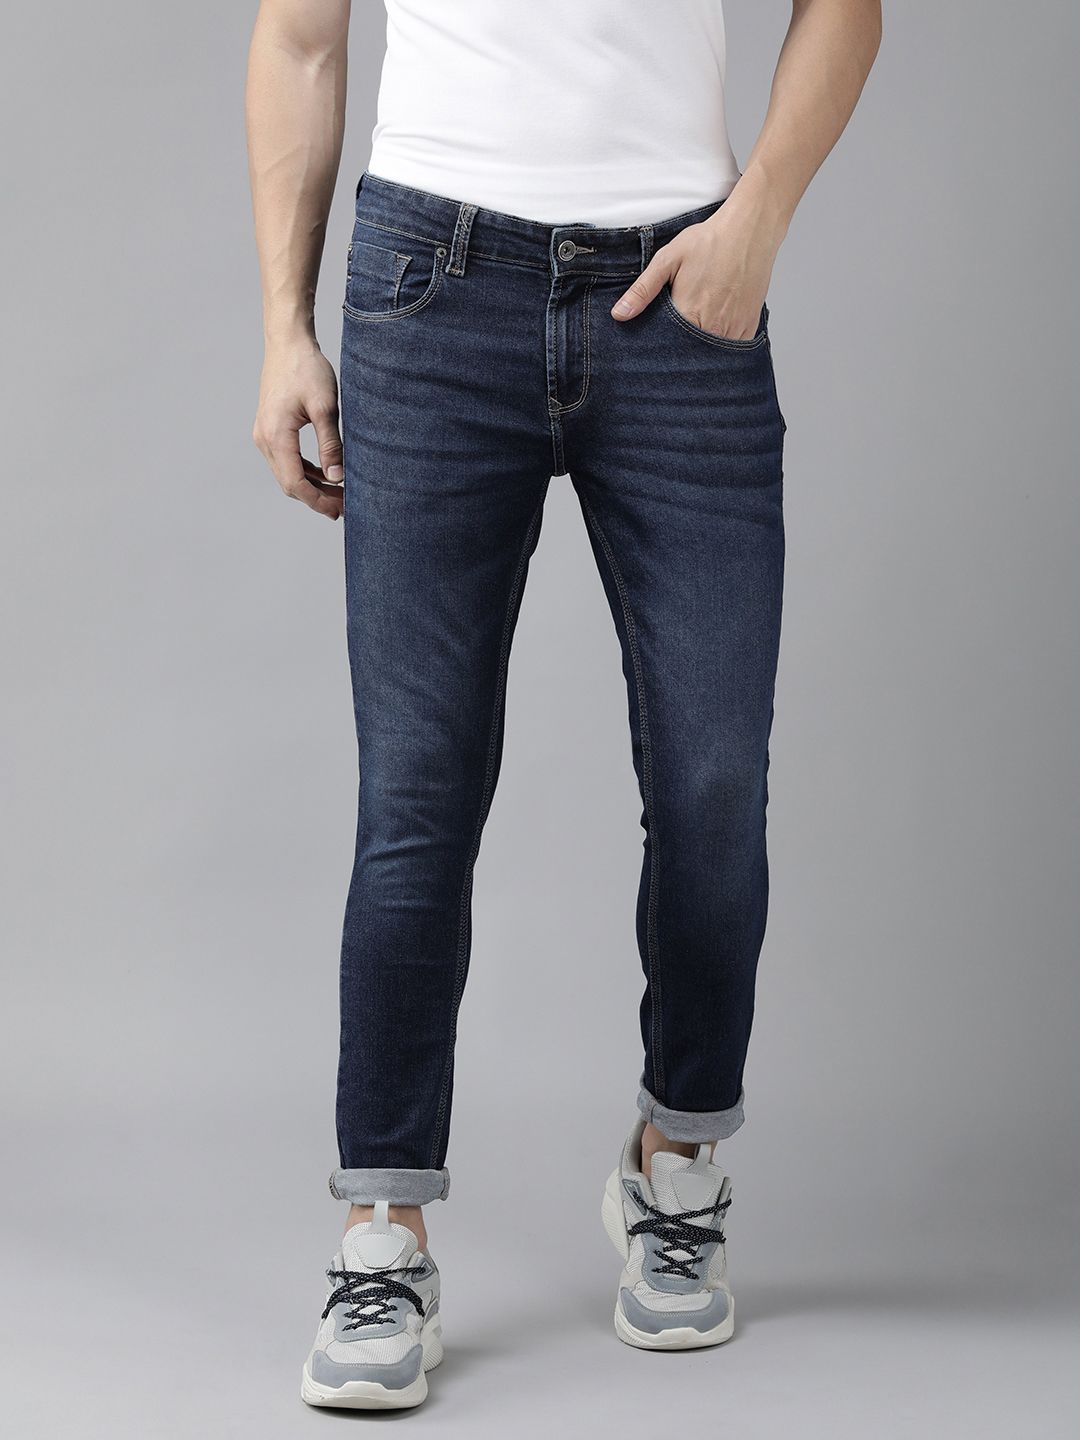 SPYKAR Men Super Skinny Fit Light Fade Stretchable Jeans - Price History